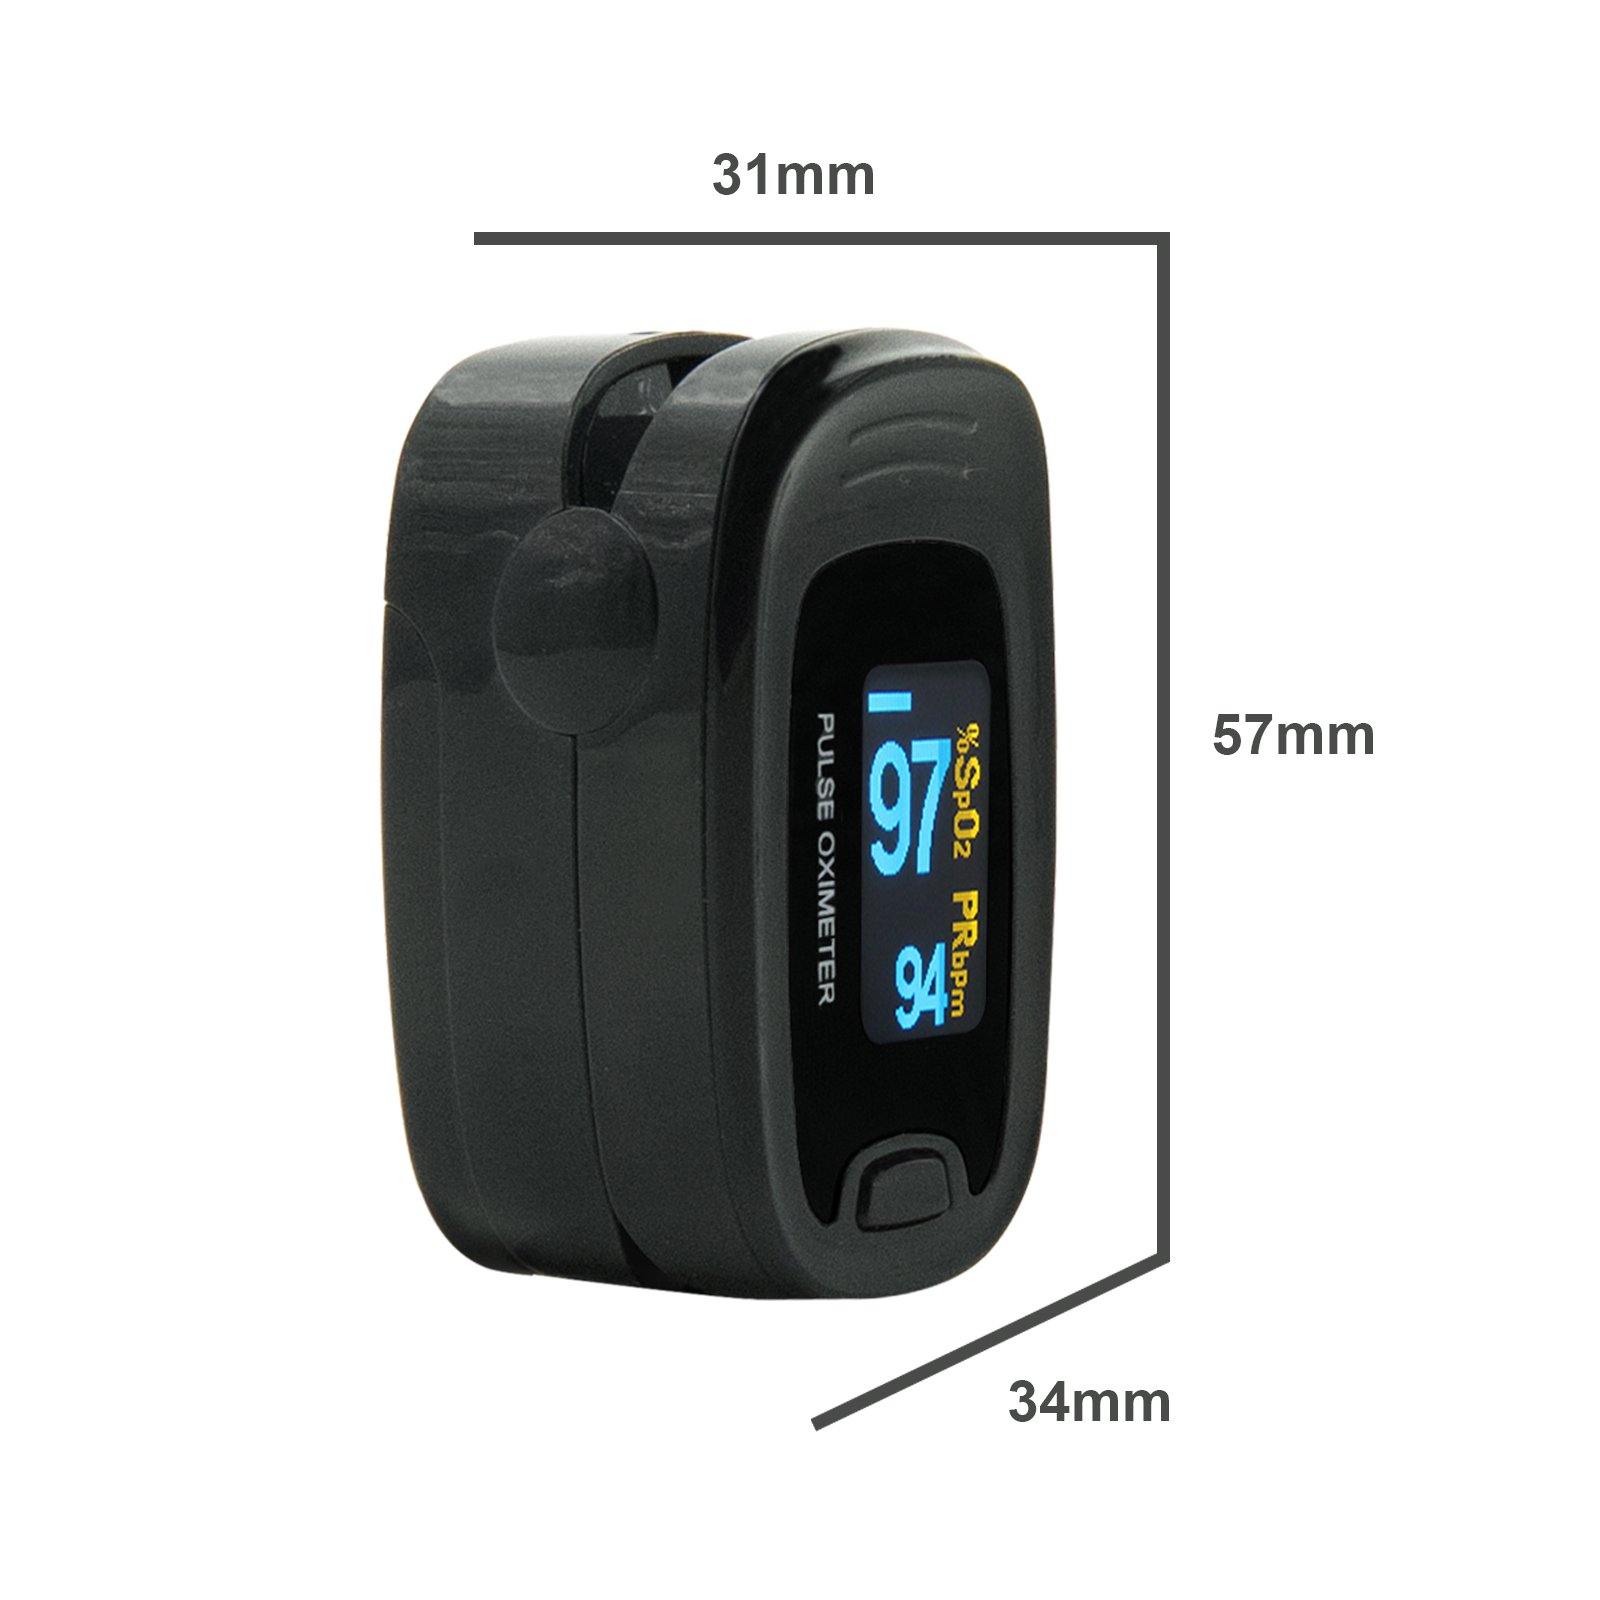 CMS50N OLED Pulse Oximeter - Hangzhou Medasia Trading